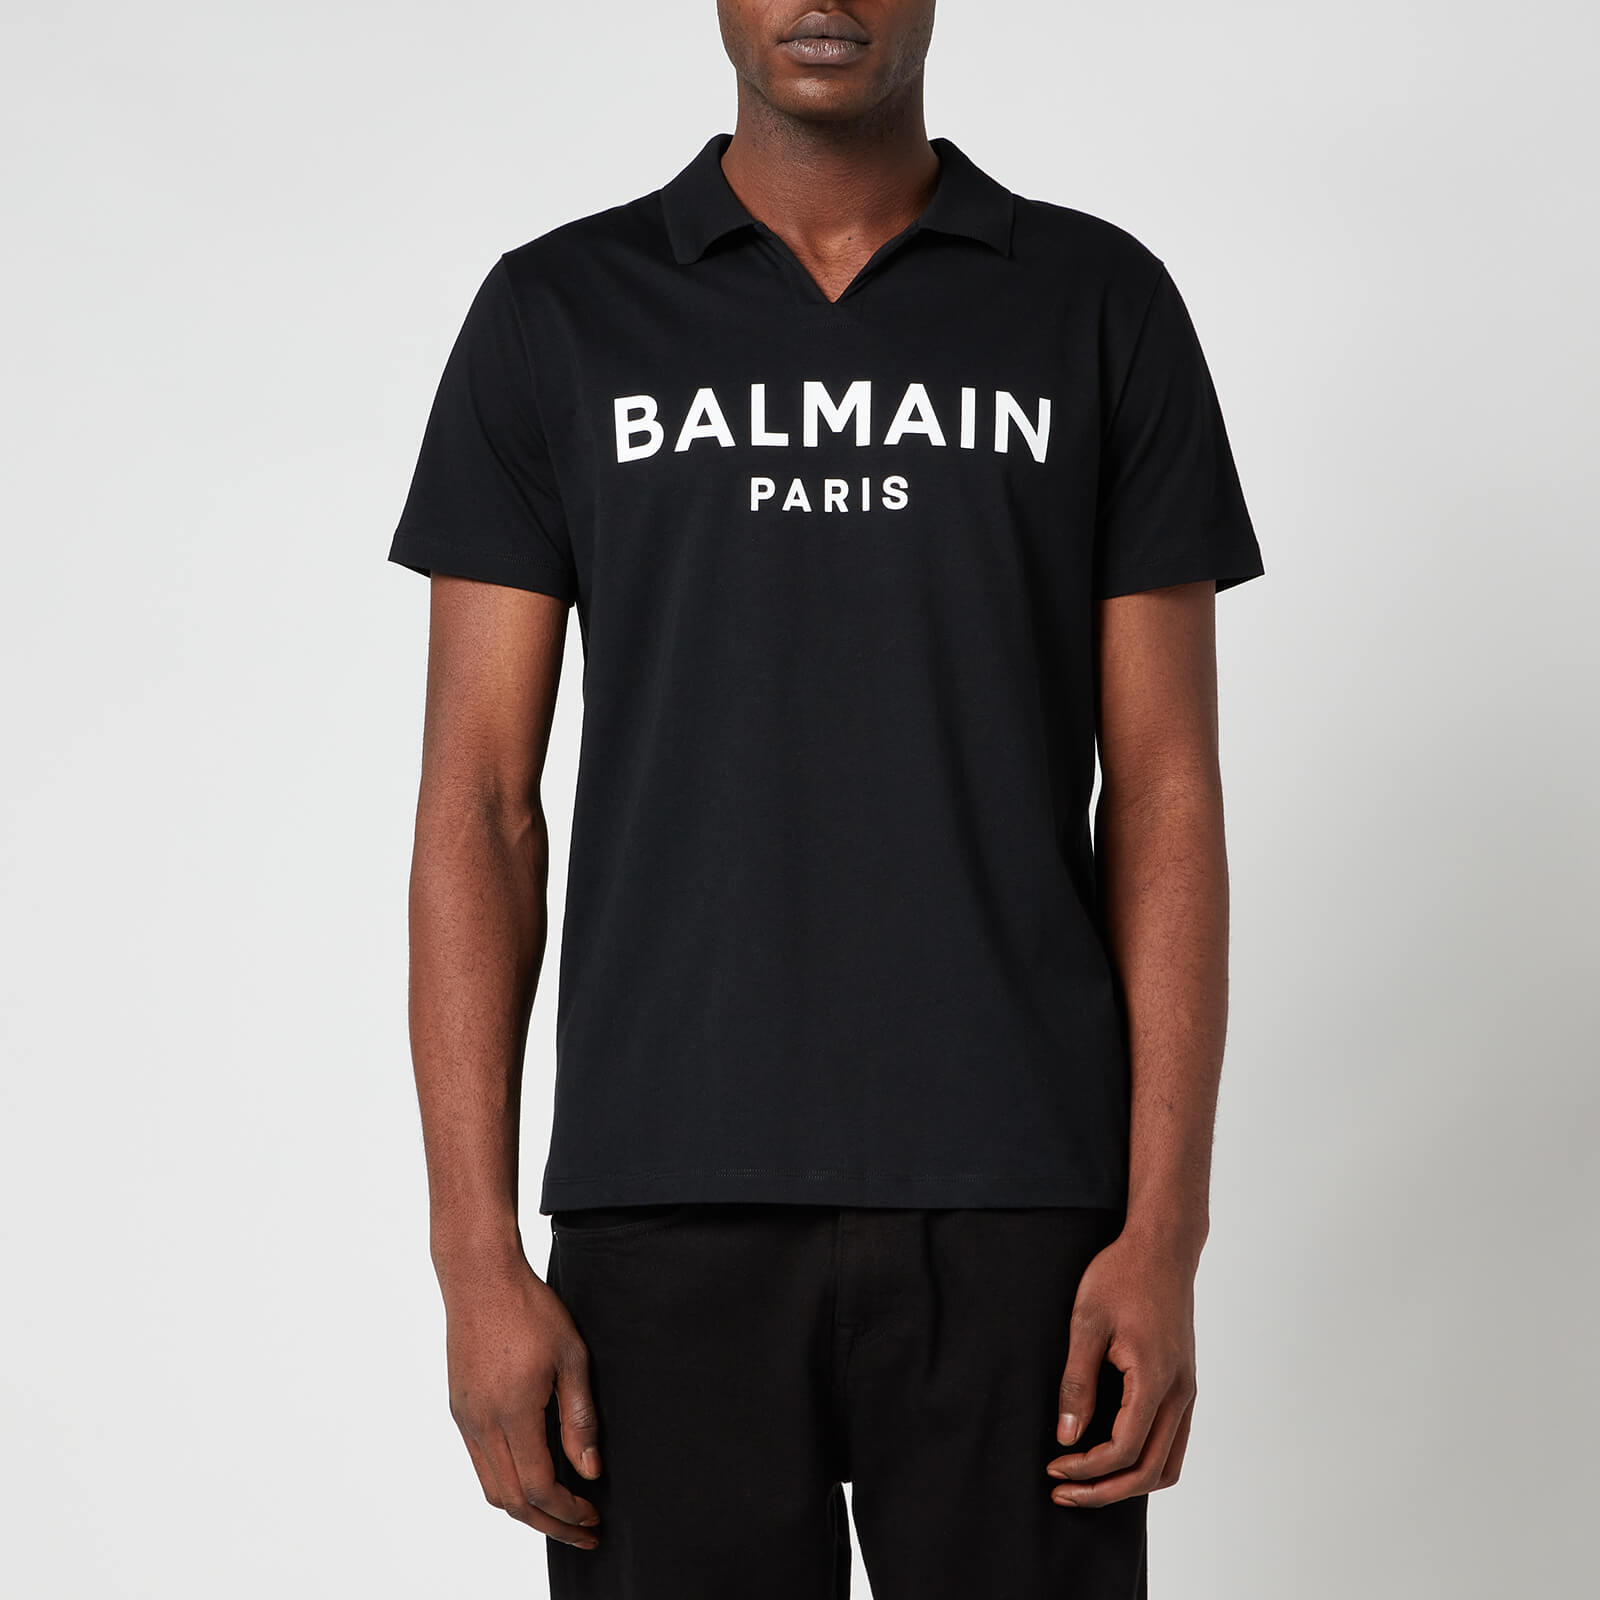 Balmain Men's Printed Polo Shirt - Black/White - M